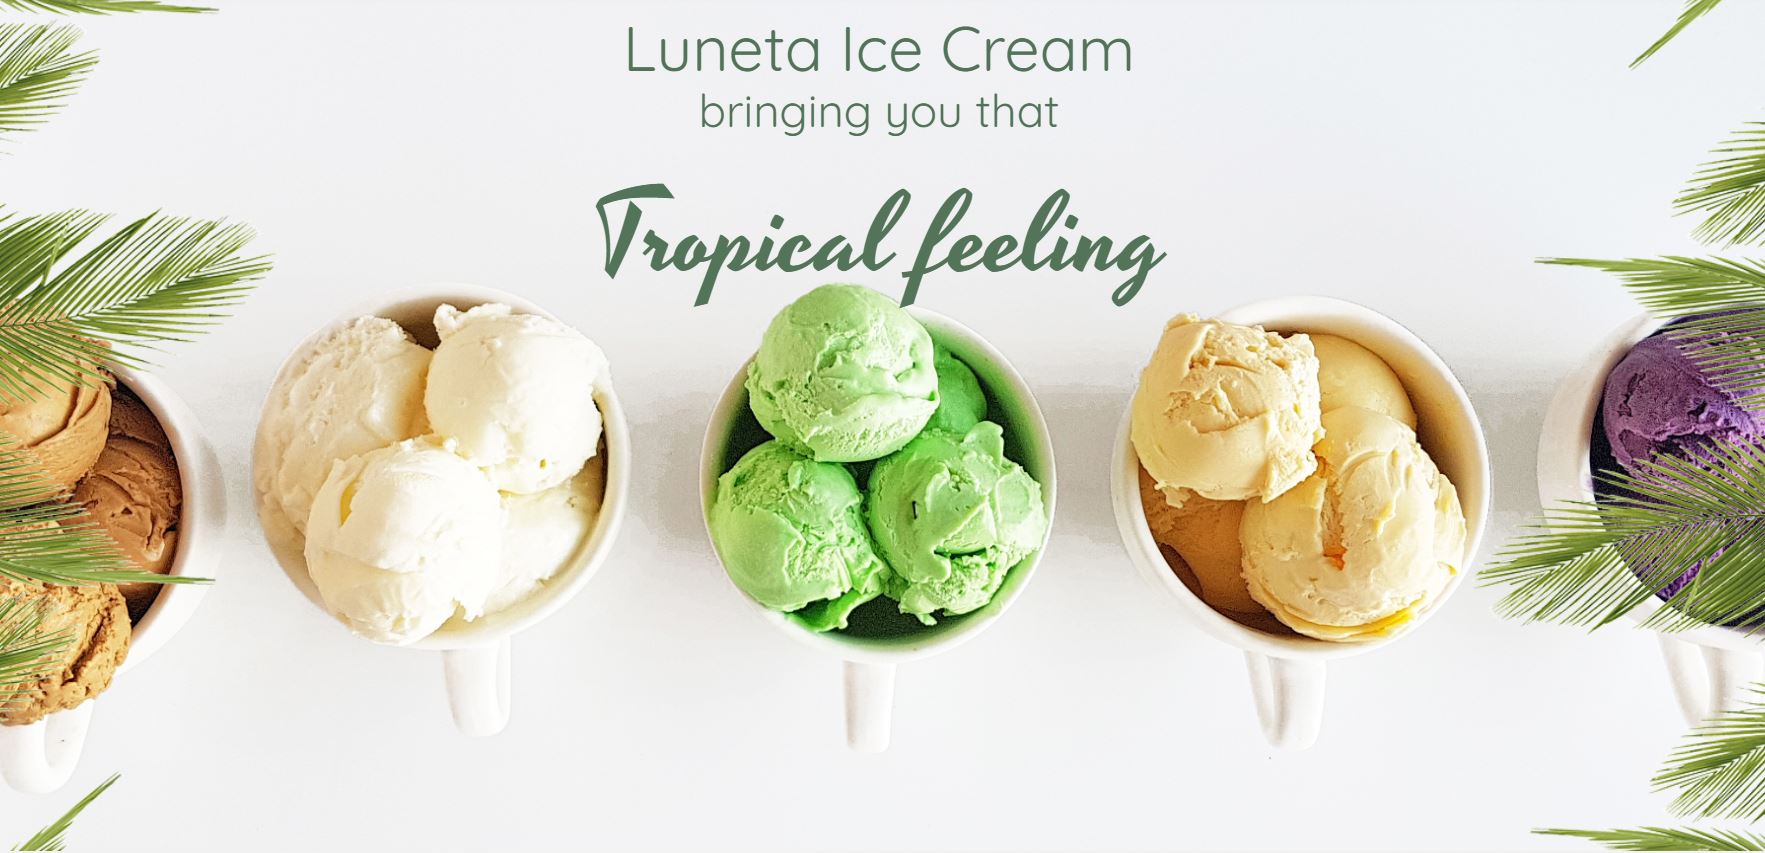 Luneta Ice Cream